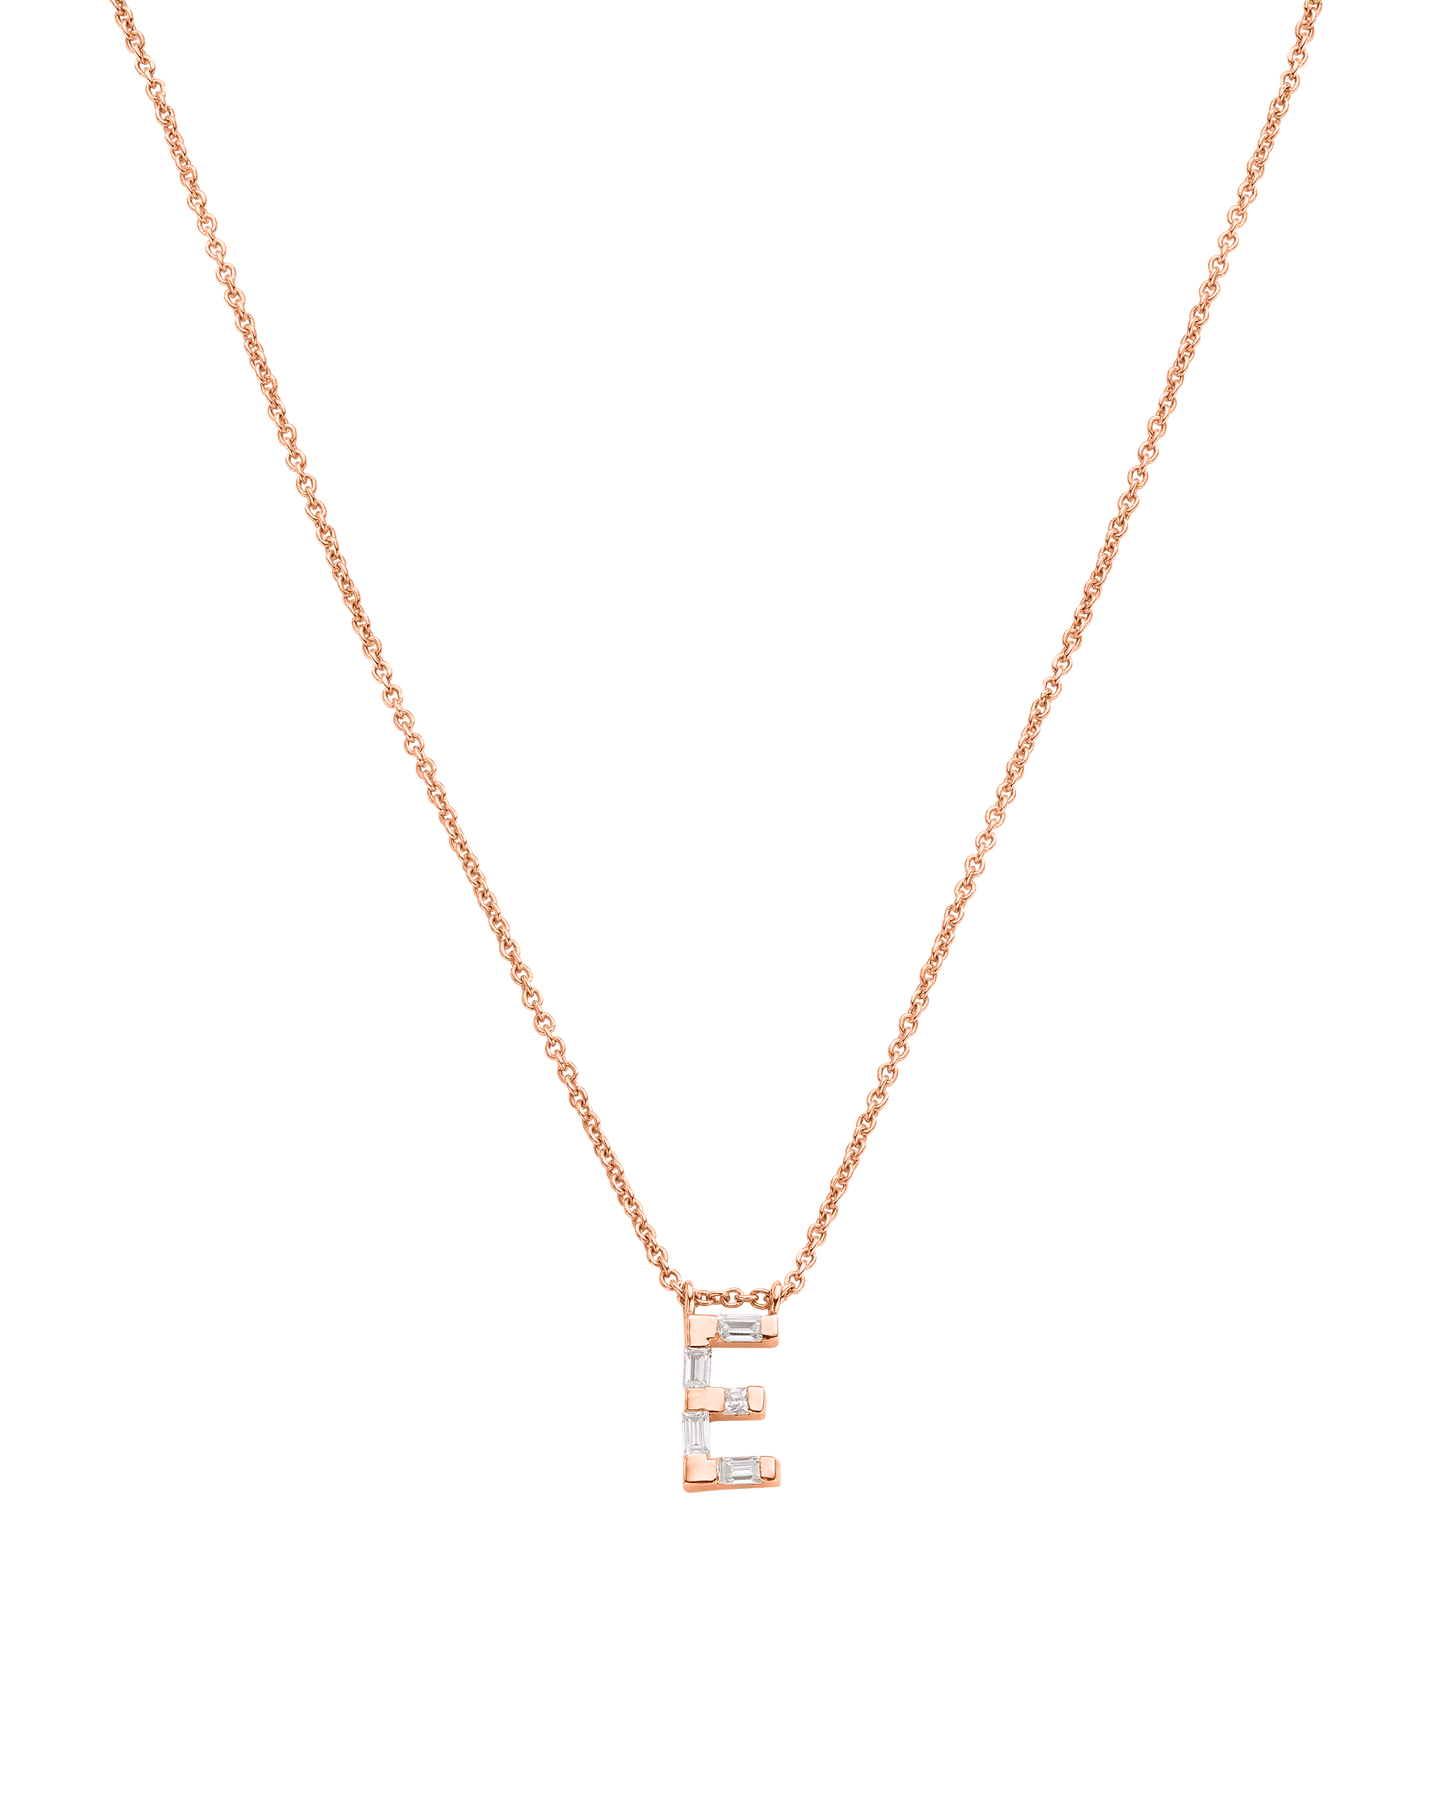 Signature Initial Baguette Necklace - 14K Rose Gold Necklaces 14K Solid Gold Adjustable 16-17" (40cm-43cm) 